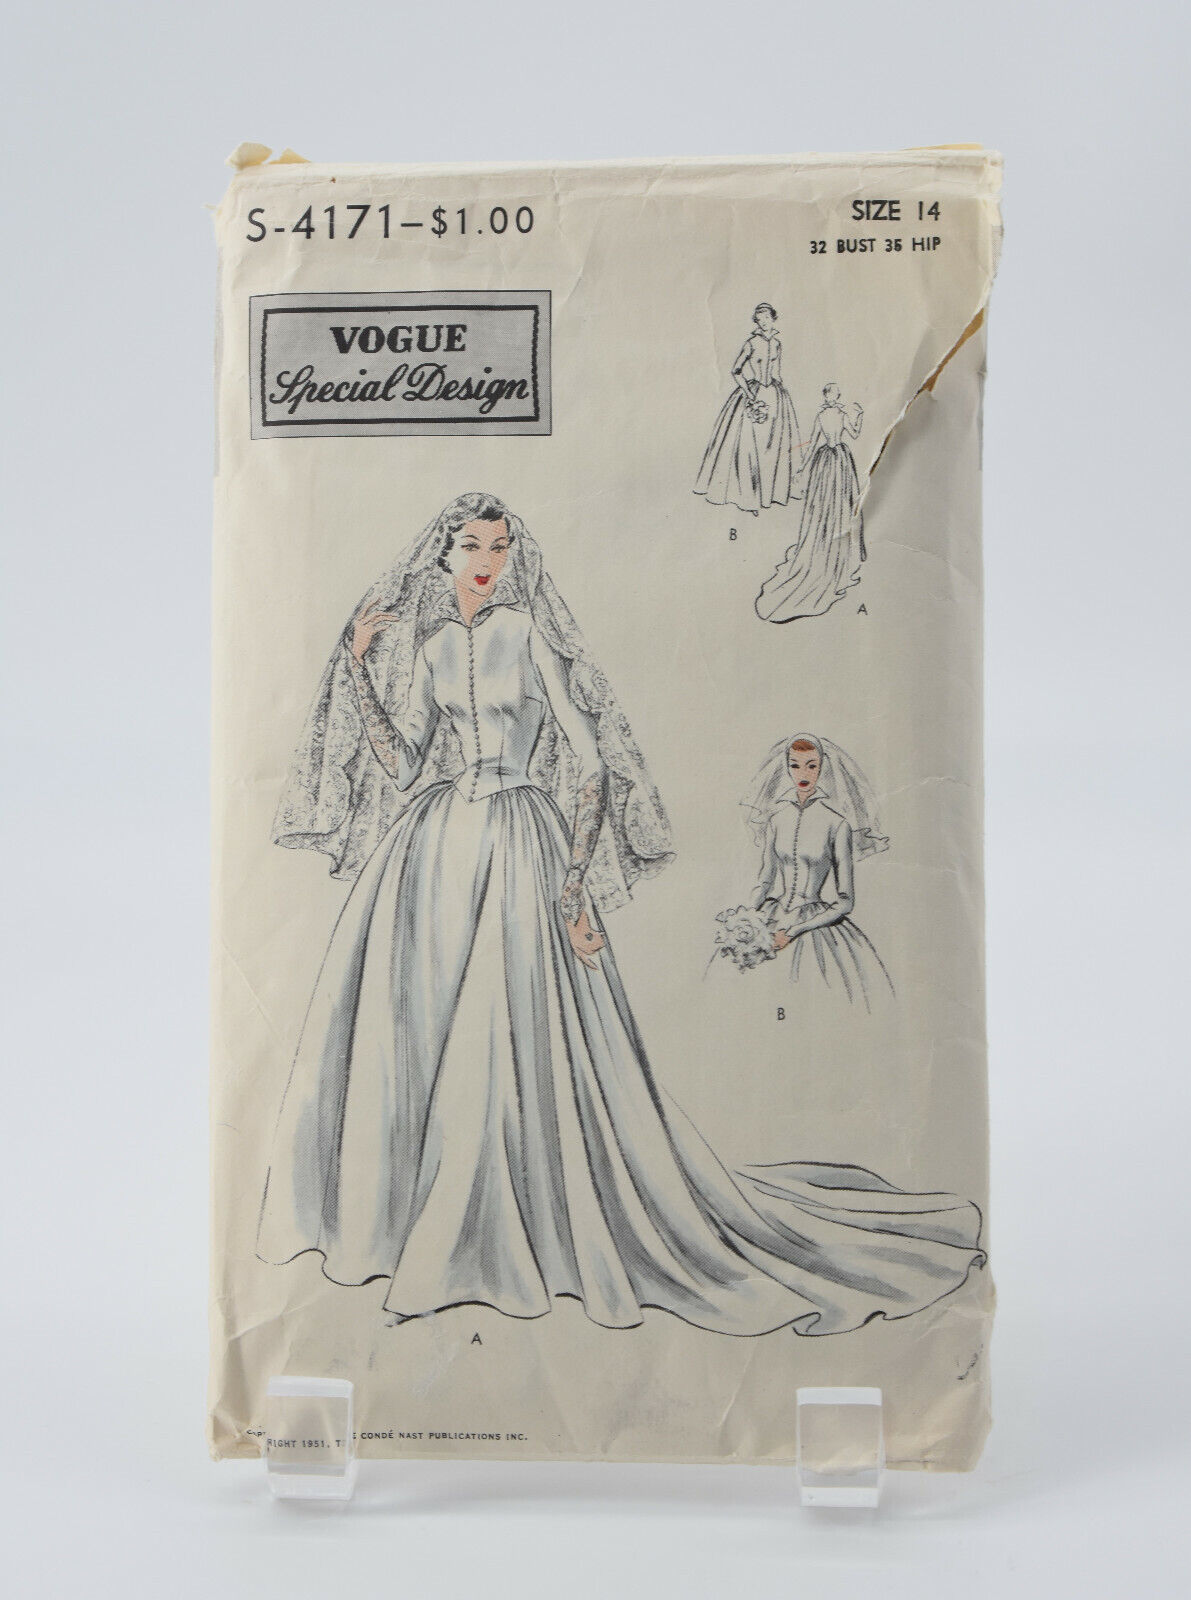 Vintage 1951 Vogue Sewing Pattern Bride/Bridesmaid Dress S-4171 Size 14